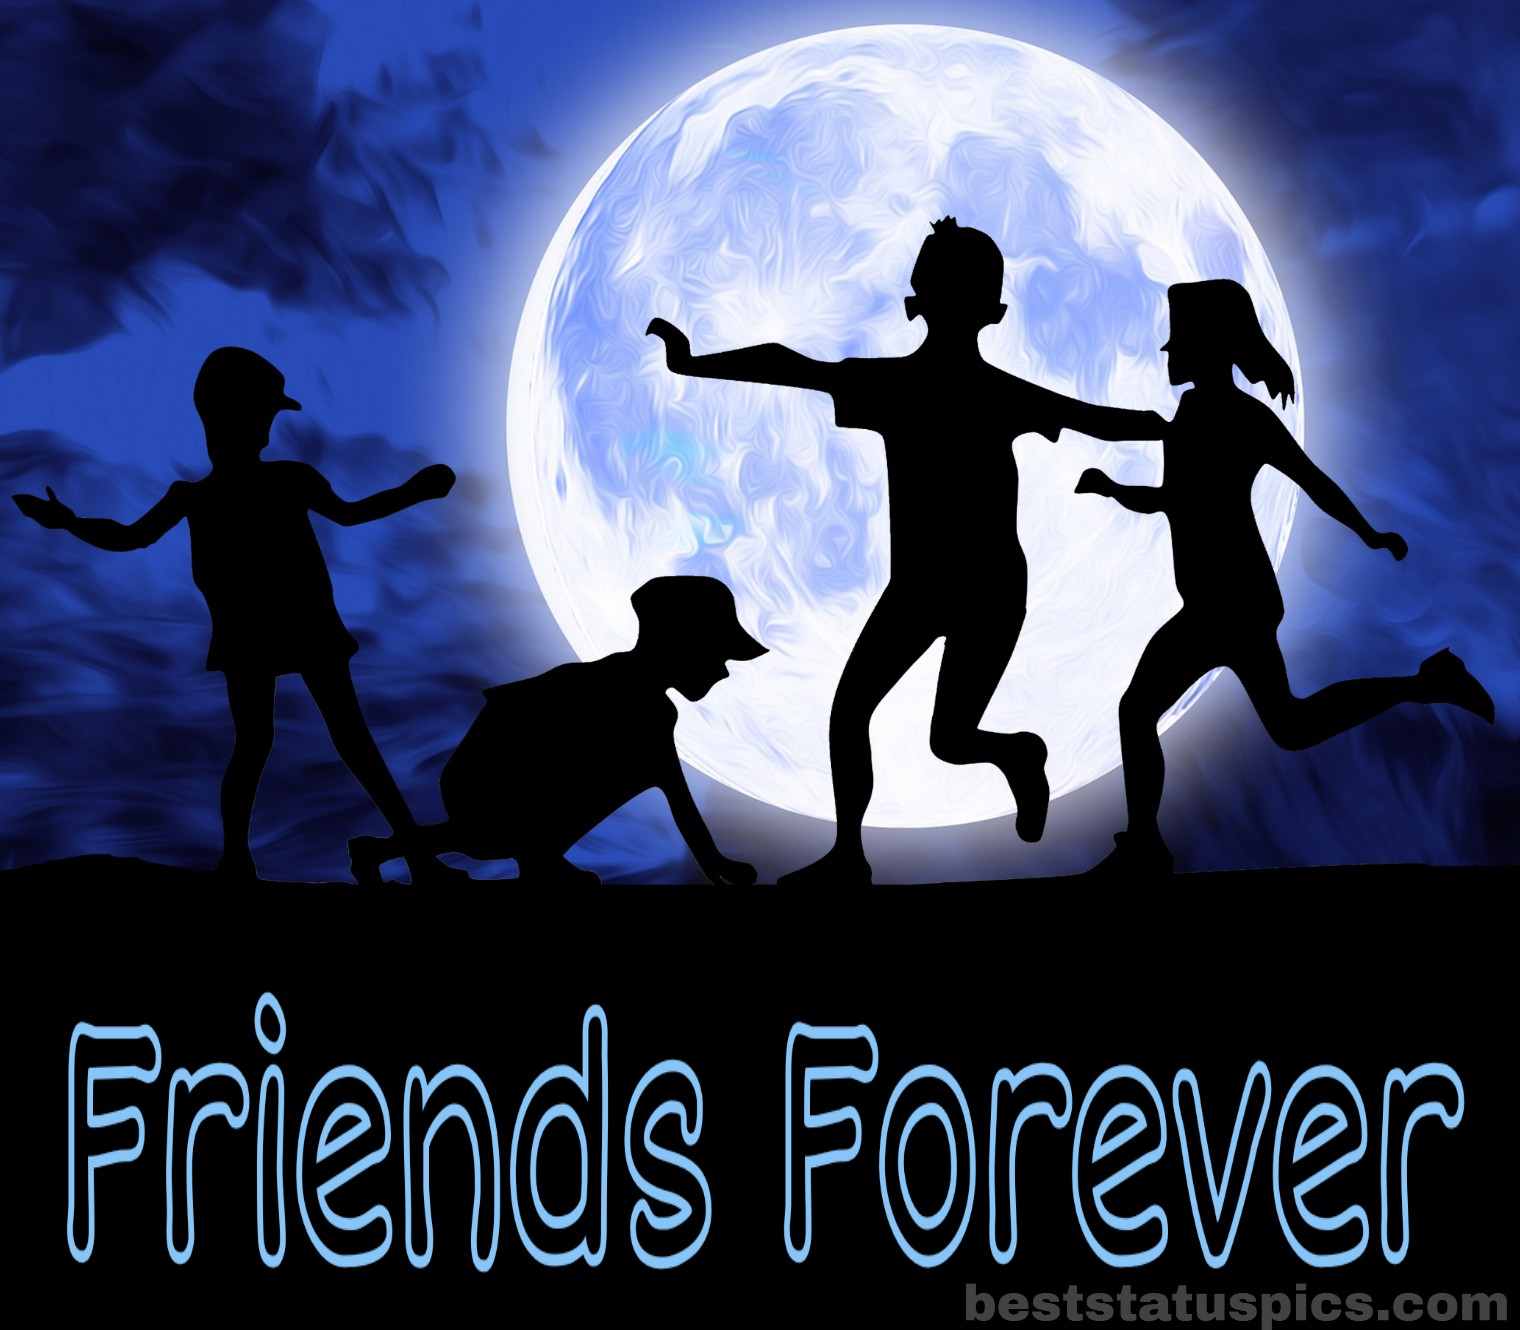 Friends Forever Whatsapp Dp Images Quotes Status Best Status Pics